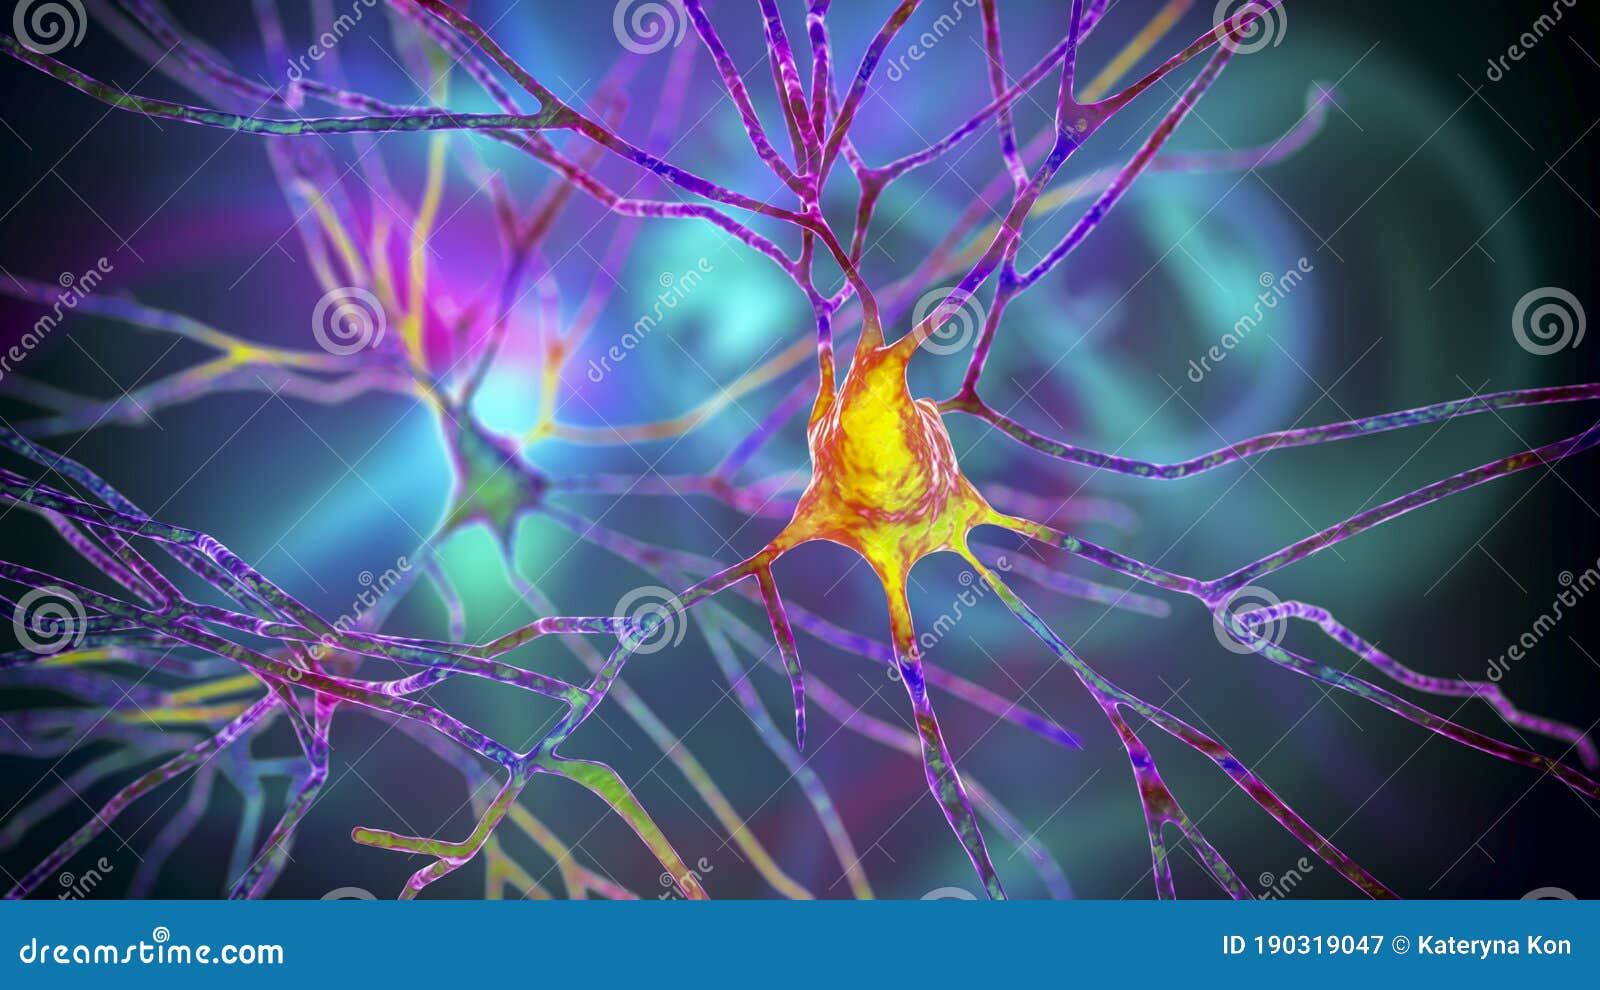 Pyramidal Neurons of the Human Brain Stock Illustration - Illustration ...